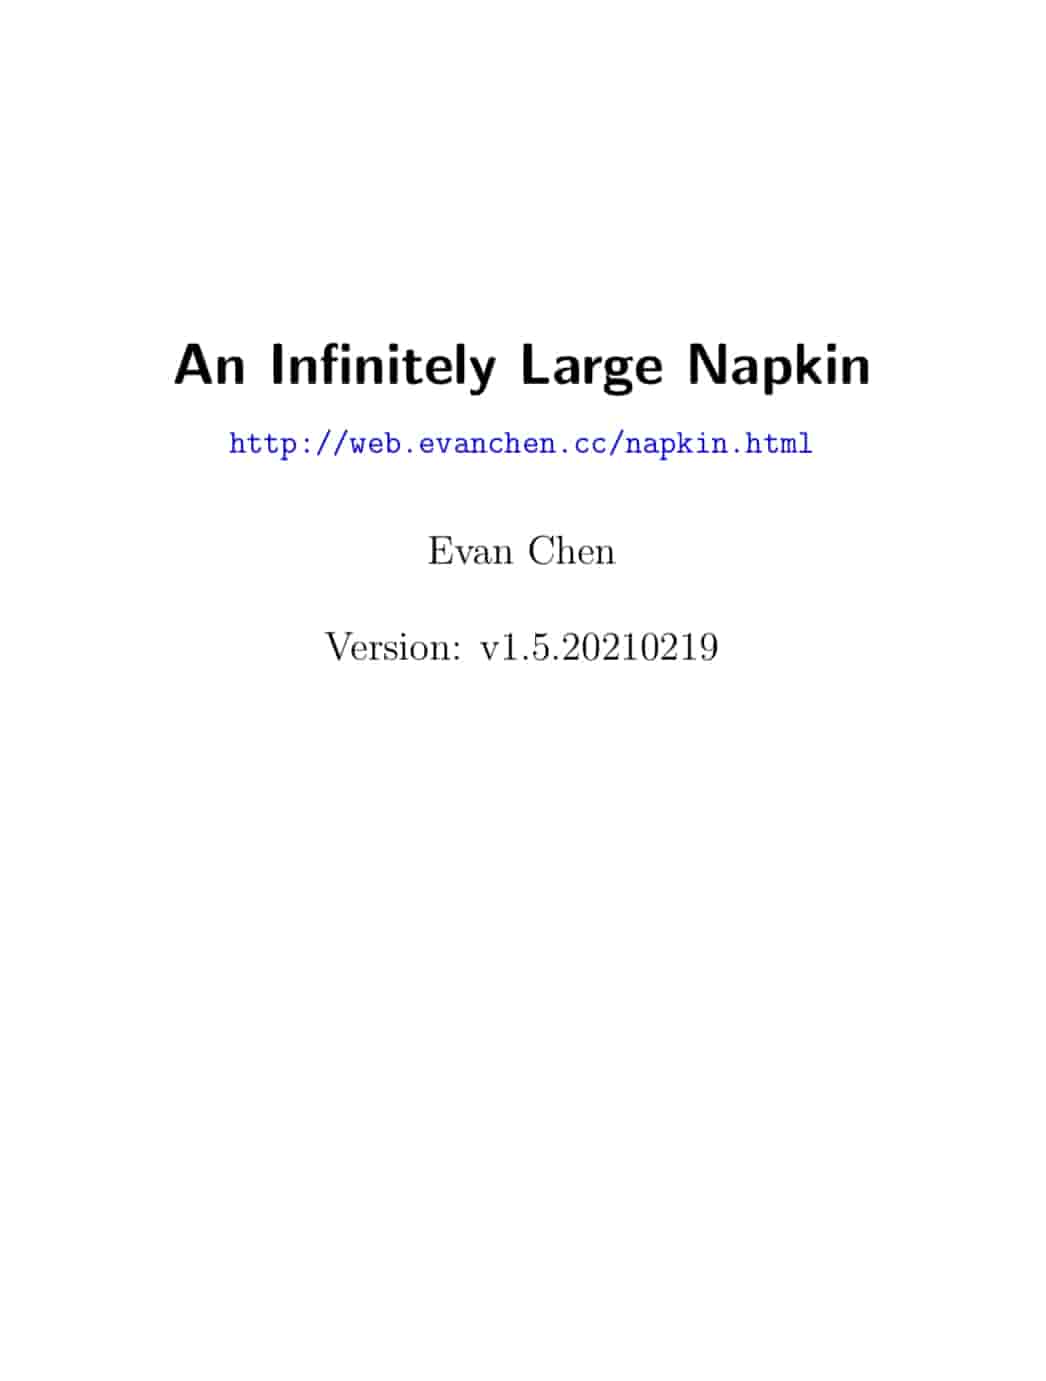 An Infinitely Large Napkin